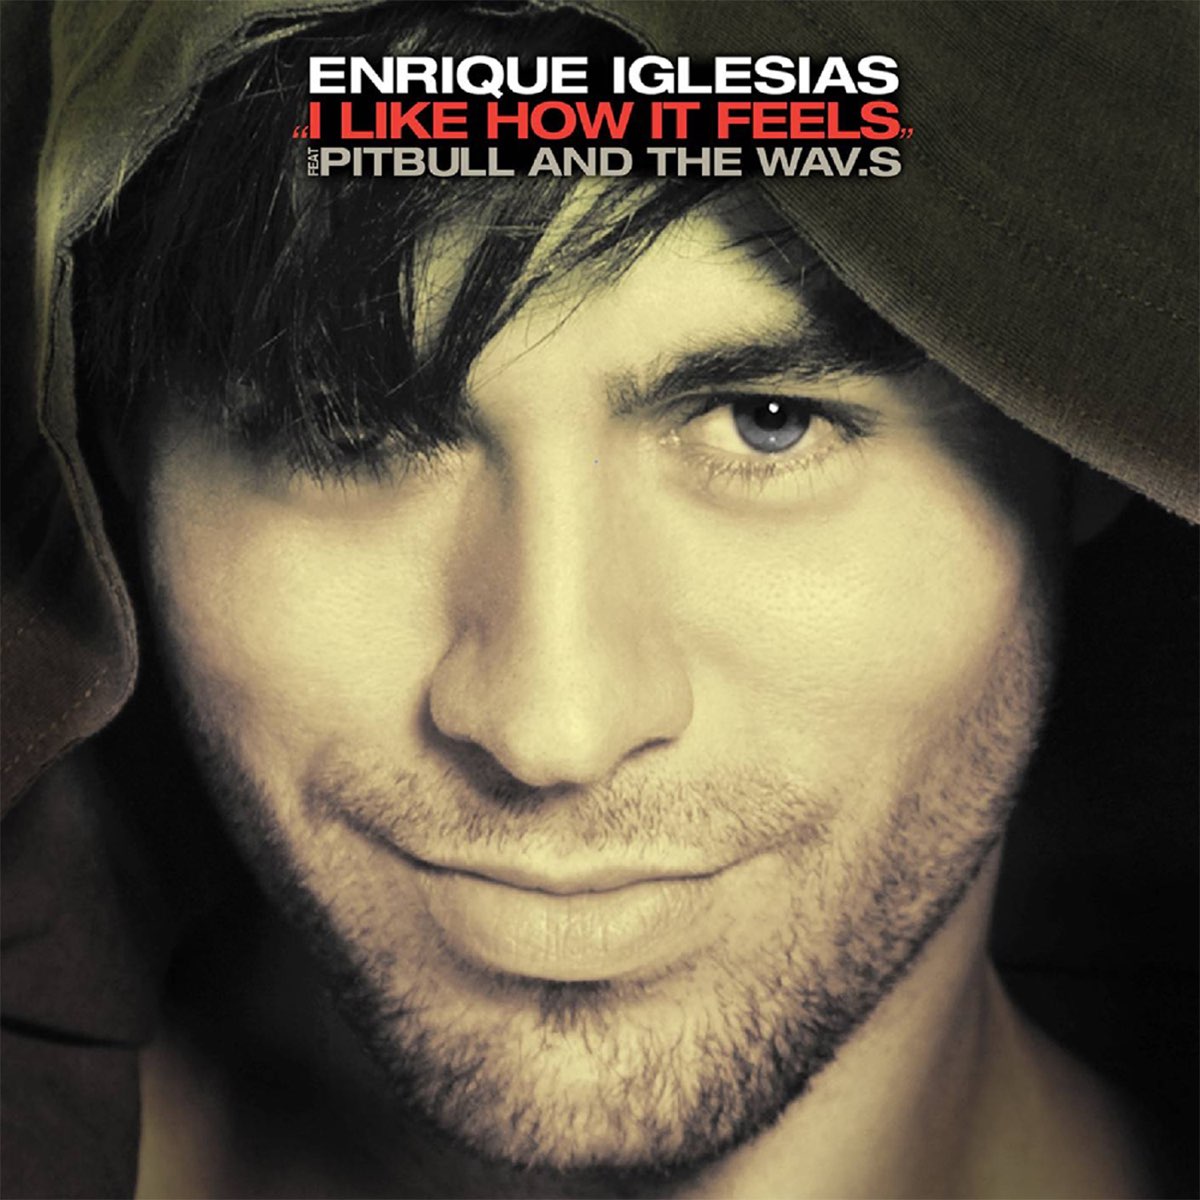 Enrique Iglesias feat. Pitbull & The WAV - I like how it feels (2013)